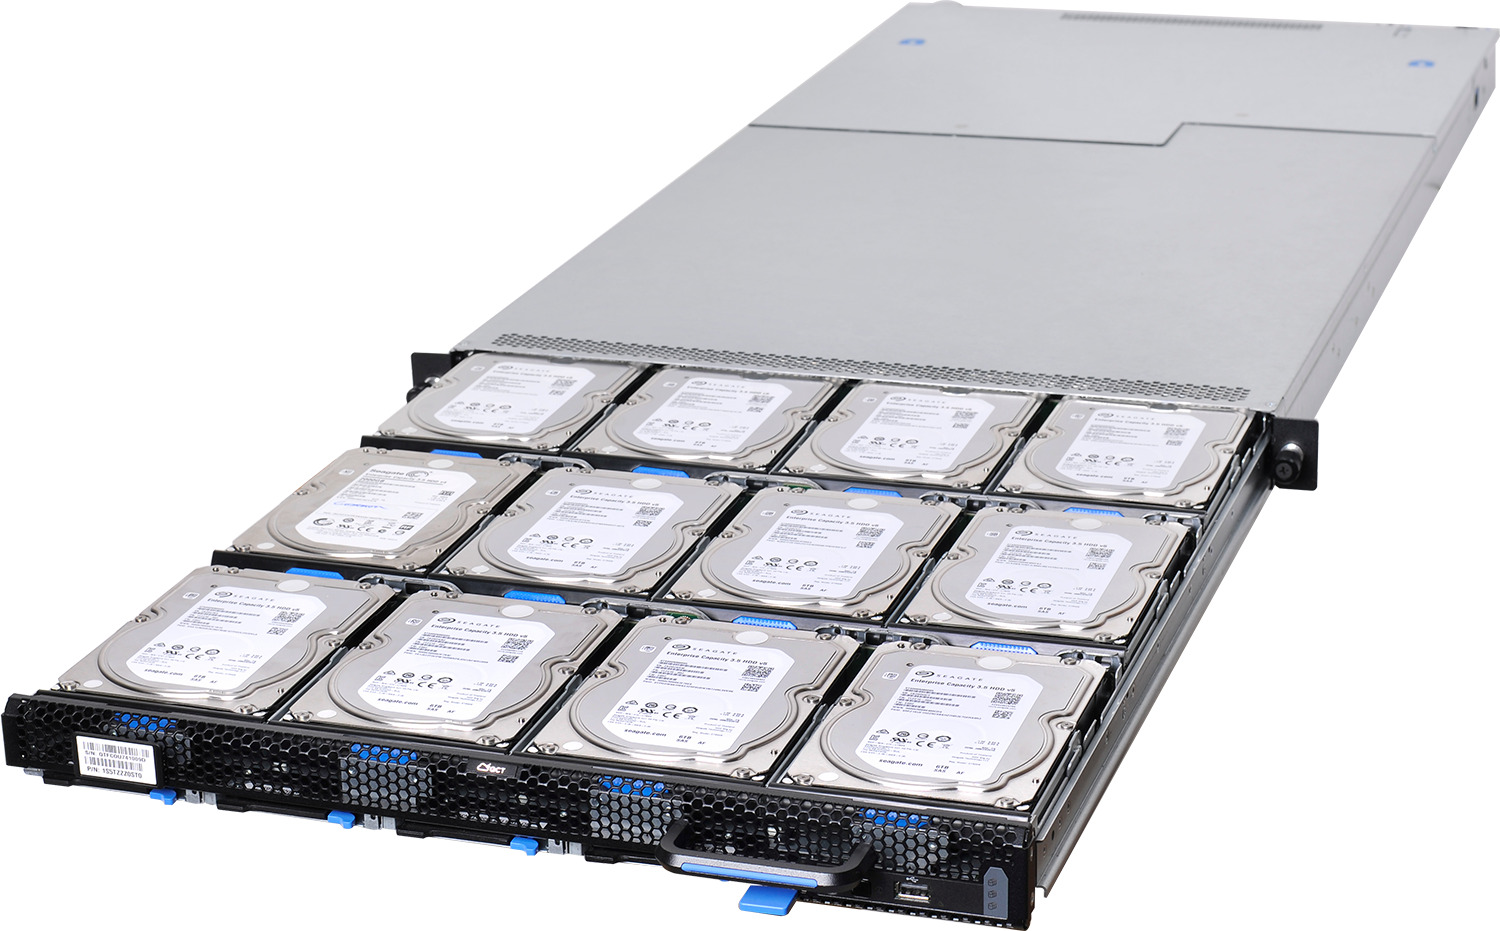 8x 12TB HD Ultra-Dense Storage Server QCT D52T-1ULH 2x Xeon Gold 6130 18C 128G